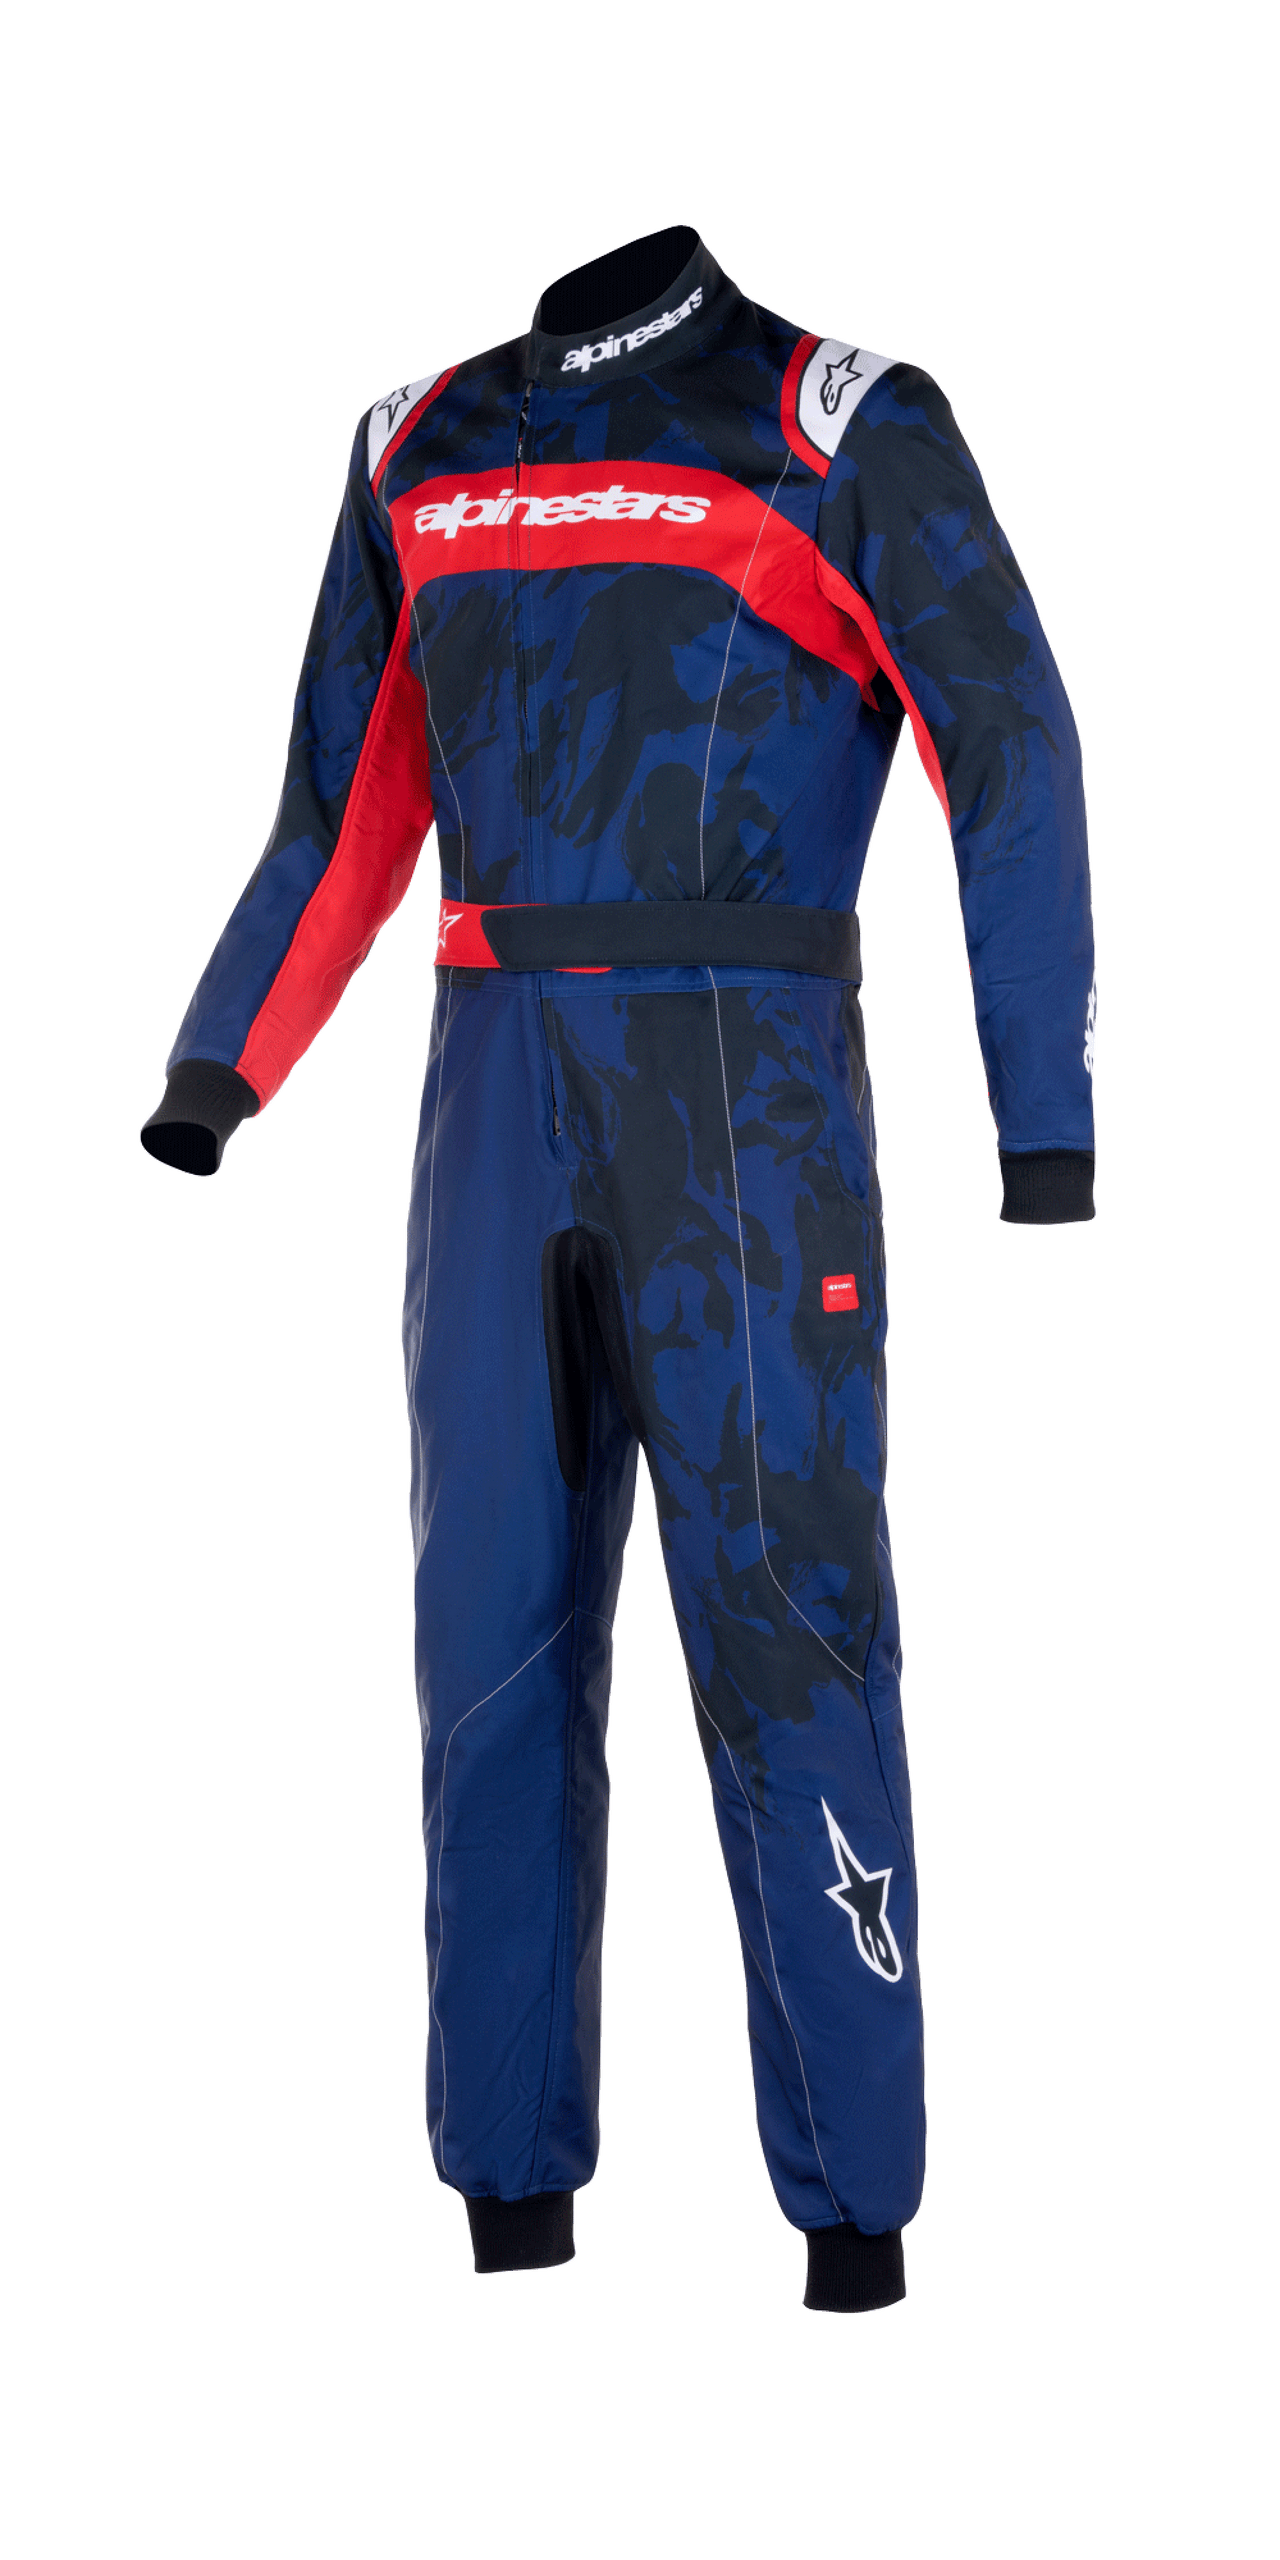 KMX-9 V2 S Graphic 5 Suit Alpinestars | Alpinestars® Official Site